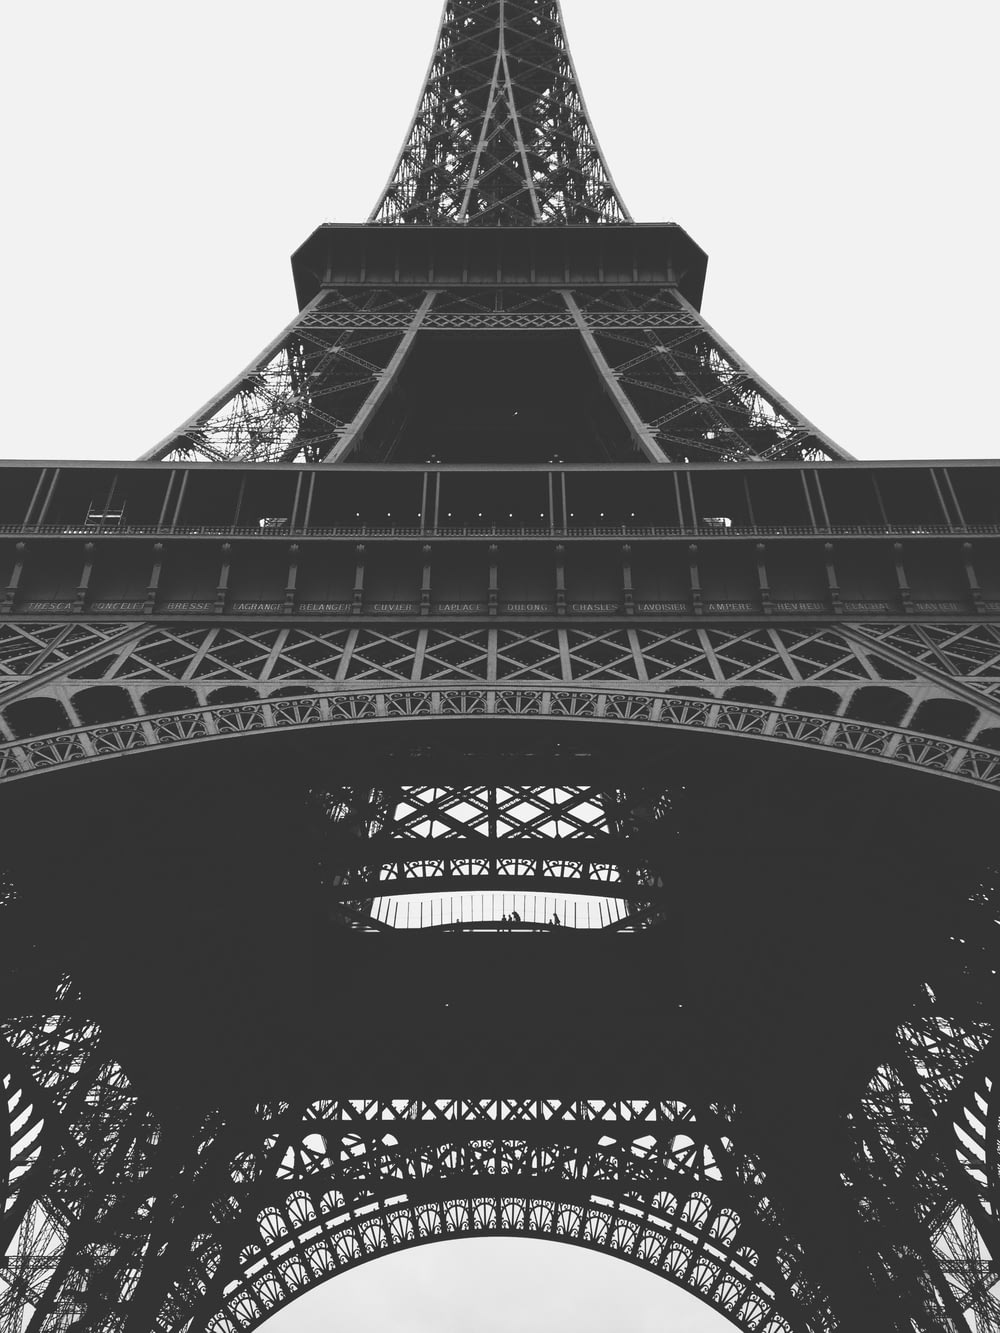 Eiffel Tower of Paris grayscale photo